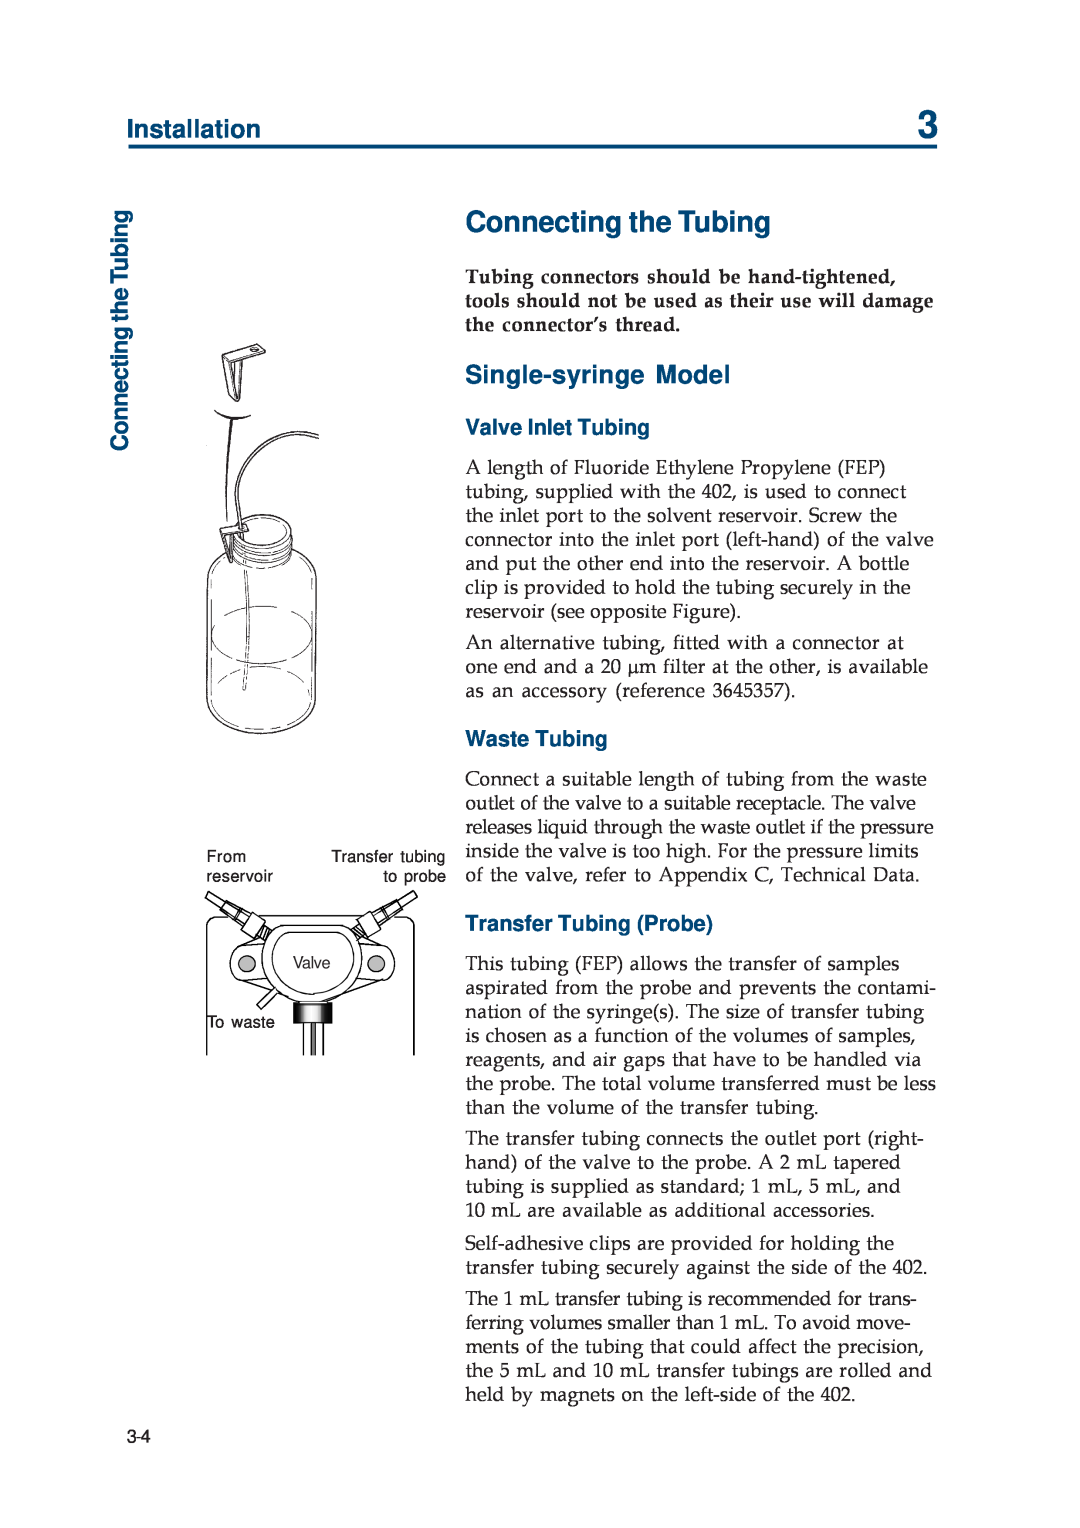 Gilson 402 manual Connecting the Tubing, Single-syringe Model, Valve Inlet Tubing, Waste Tubing, Transfer Tubing Probe 